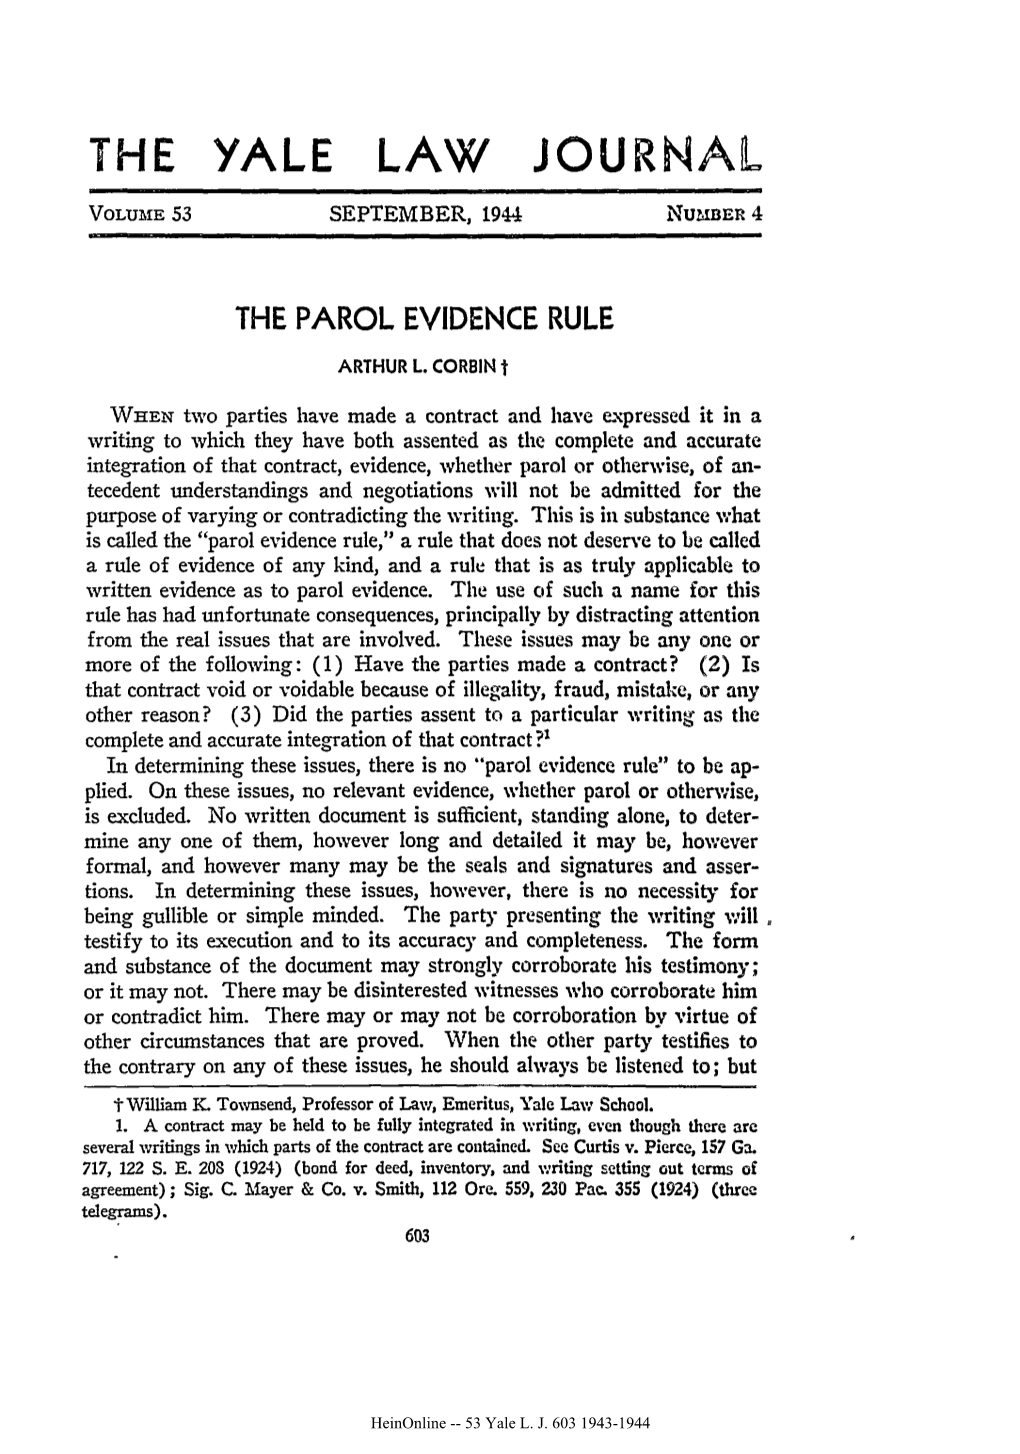 The Parol Evidence Rule